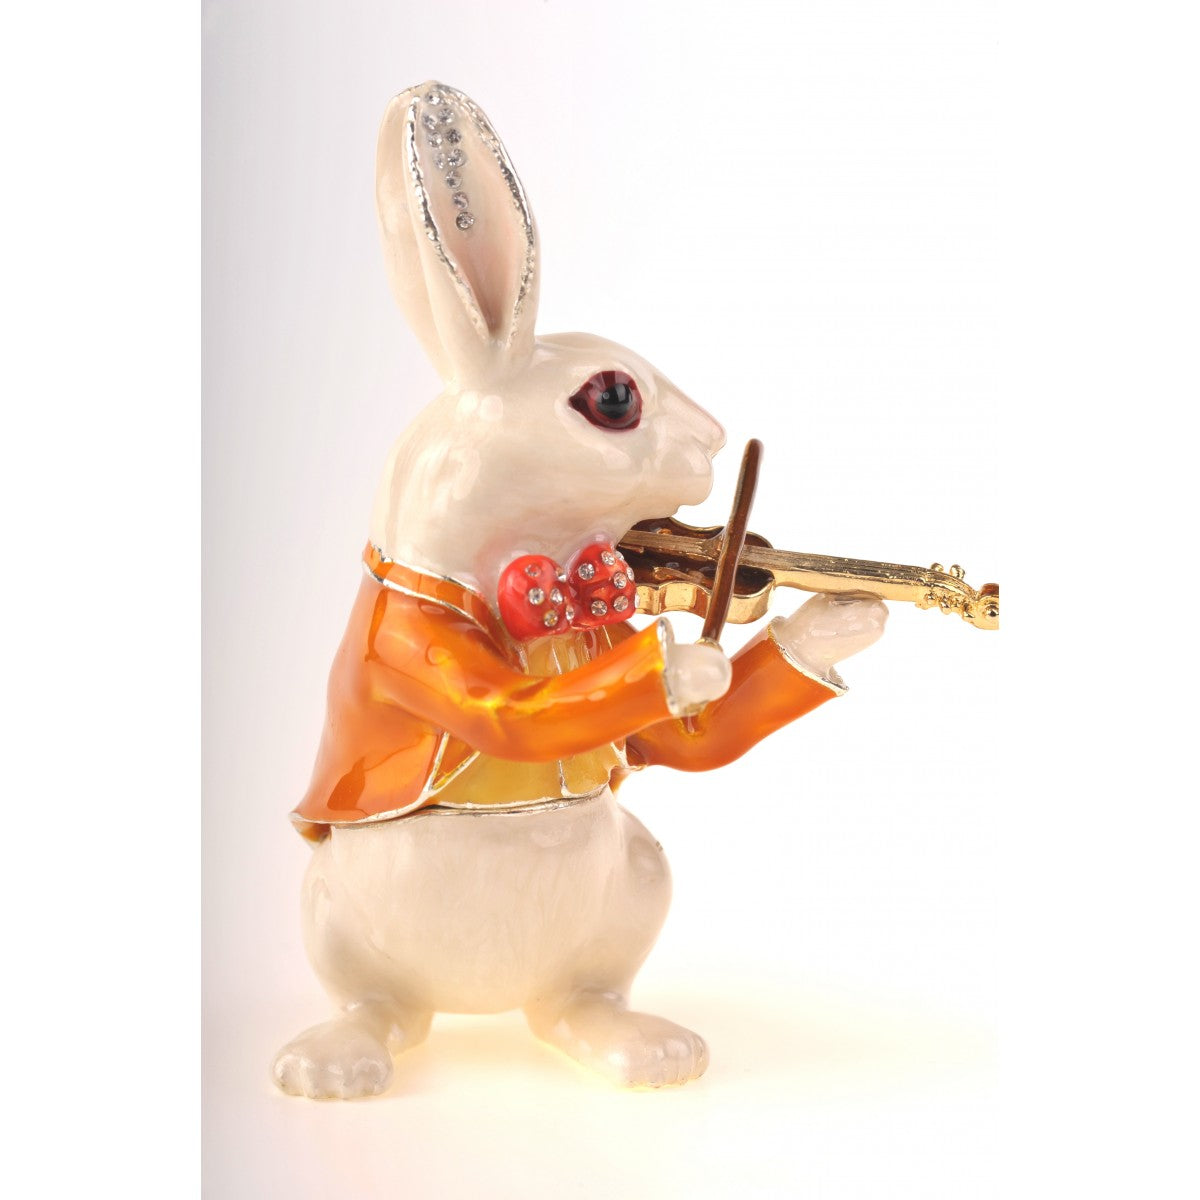 Rabbit playing the violin by Keren Kopal